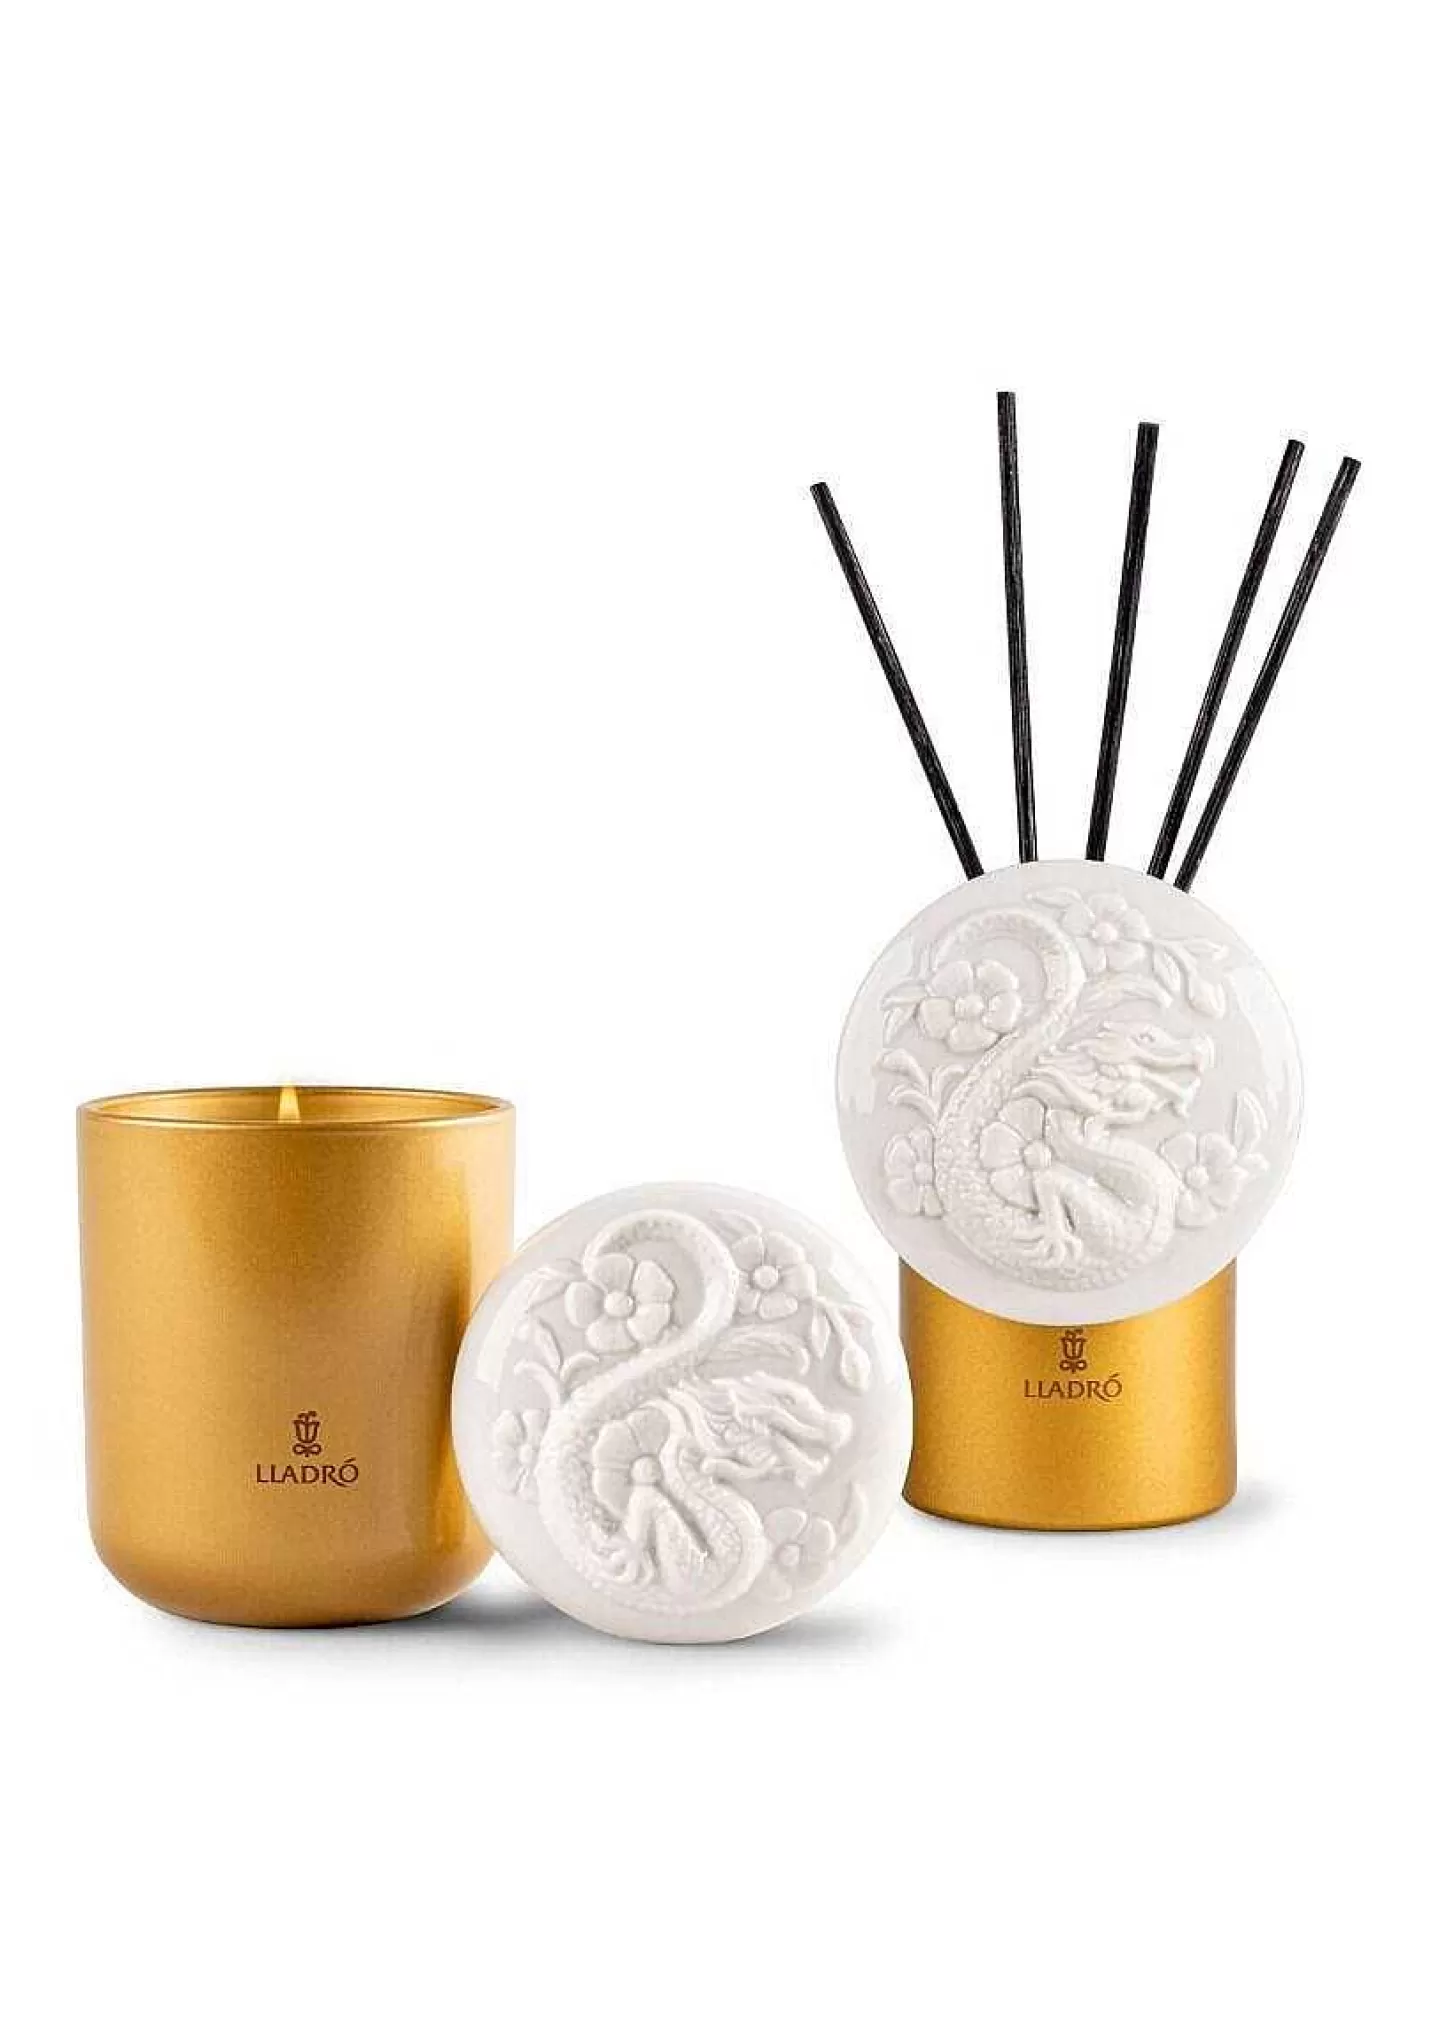 Lladró Dragon Perfume Diffuser - Redwood Fire^ Gifts